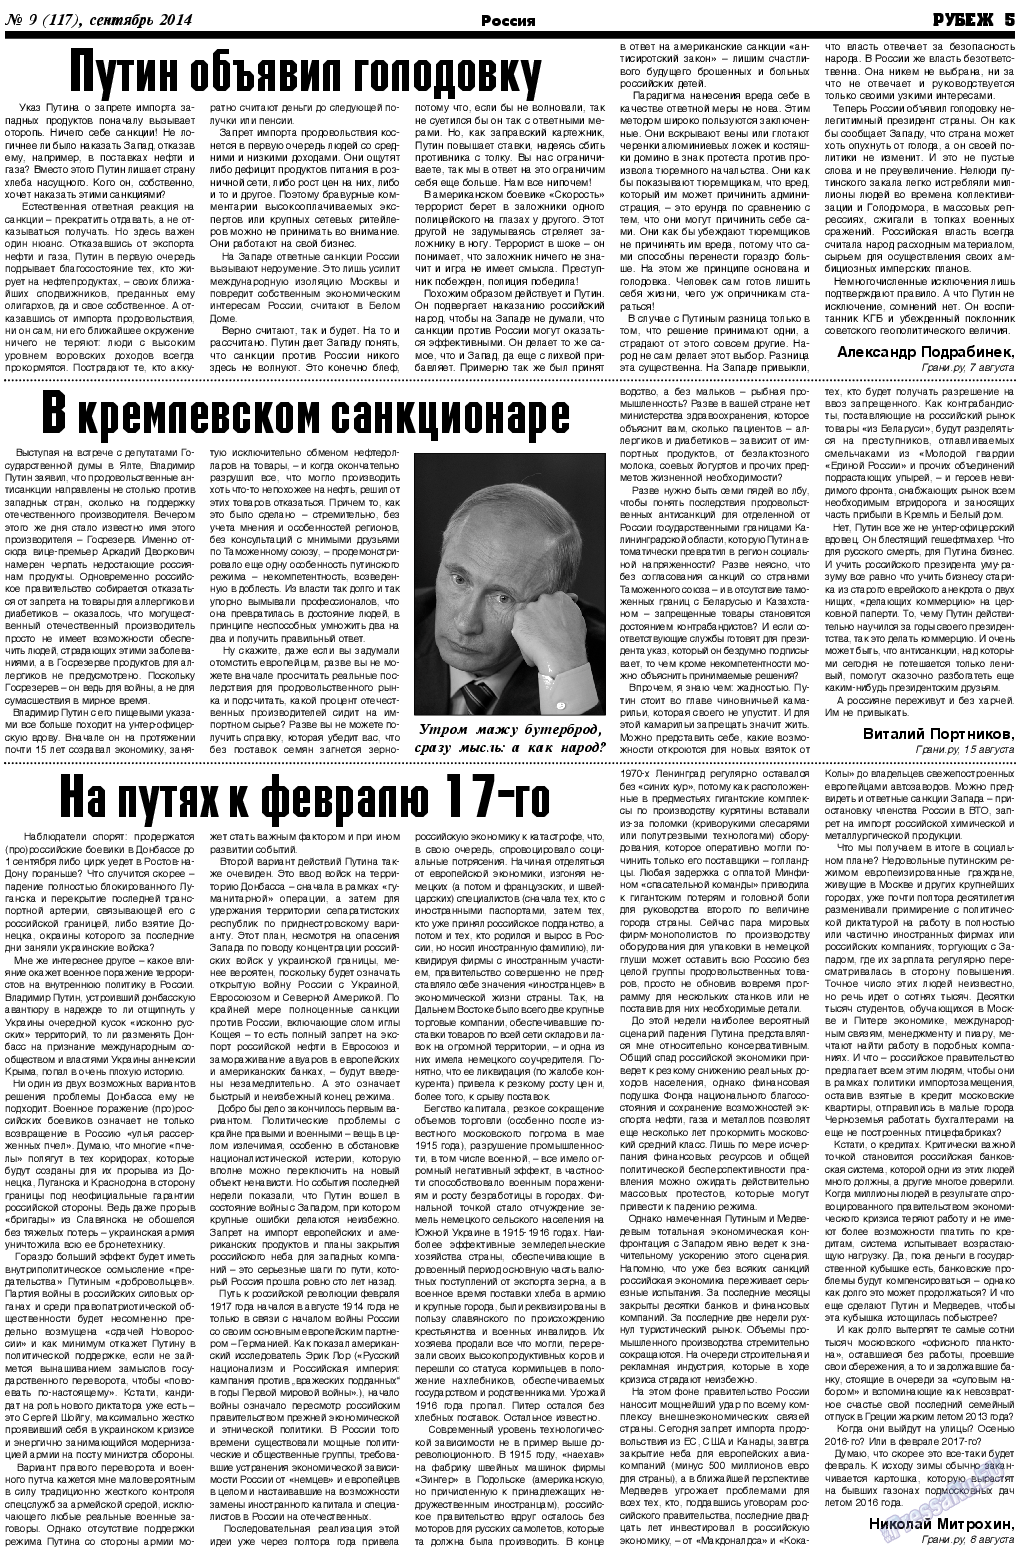 Рубеж, газета. 2014 №9 стр.5